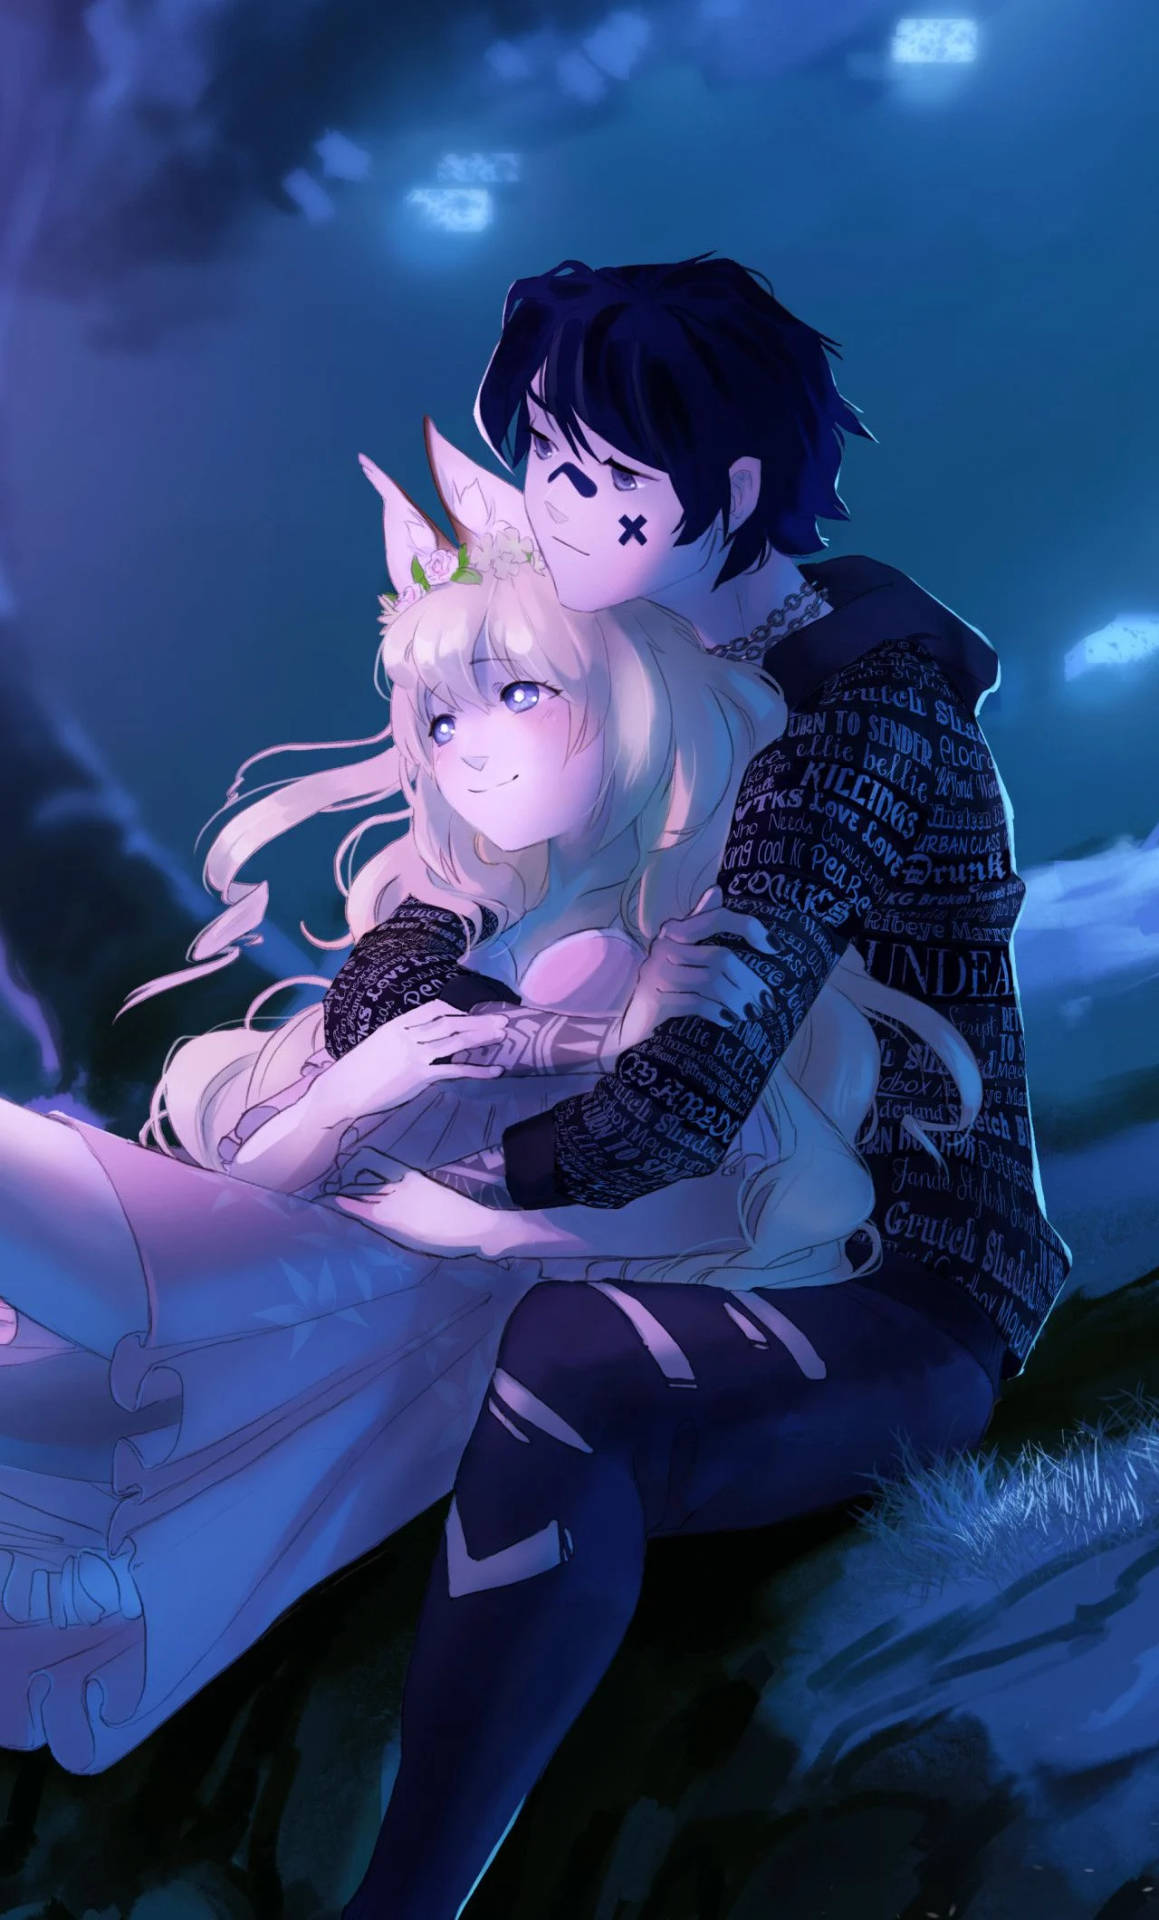 Anime Hug Under Night Sky Wallpaper